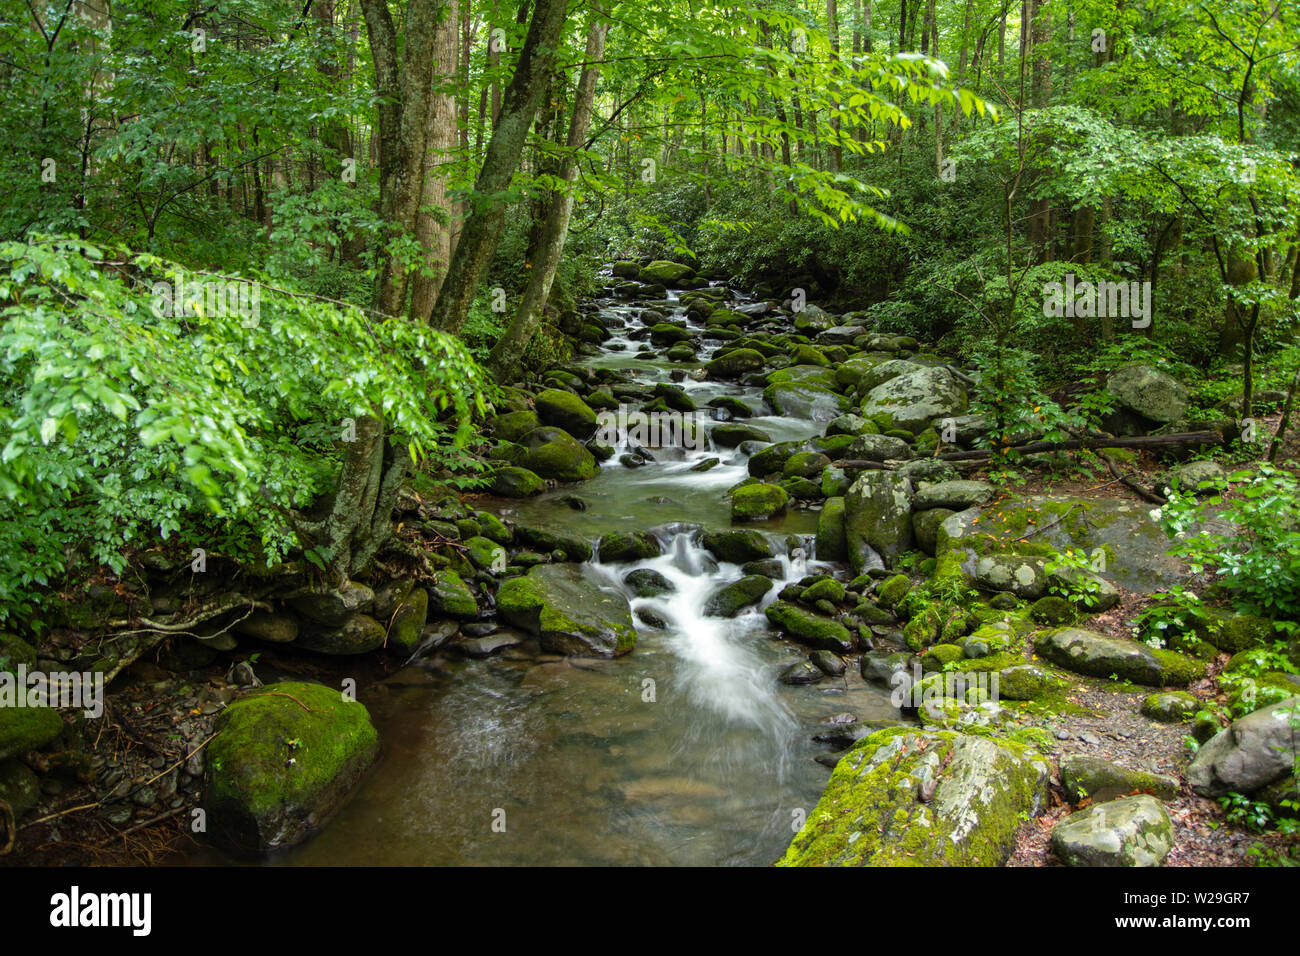 Great Smoky Mountain Stream. Peaceful mountain stream flows through the pristine wilderness of the Great Smoky Mountains National Park. Stock Photo